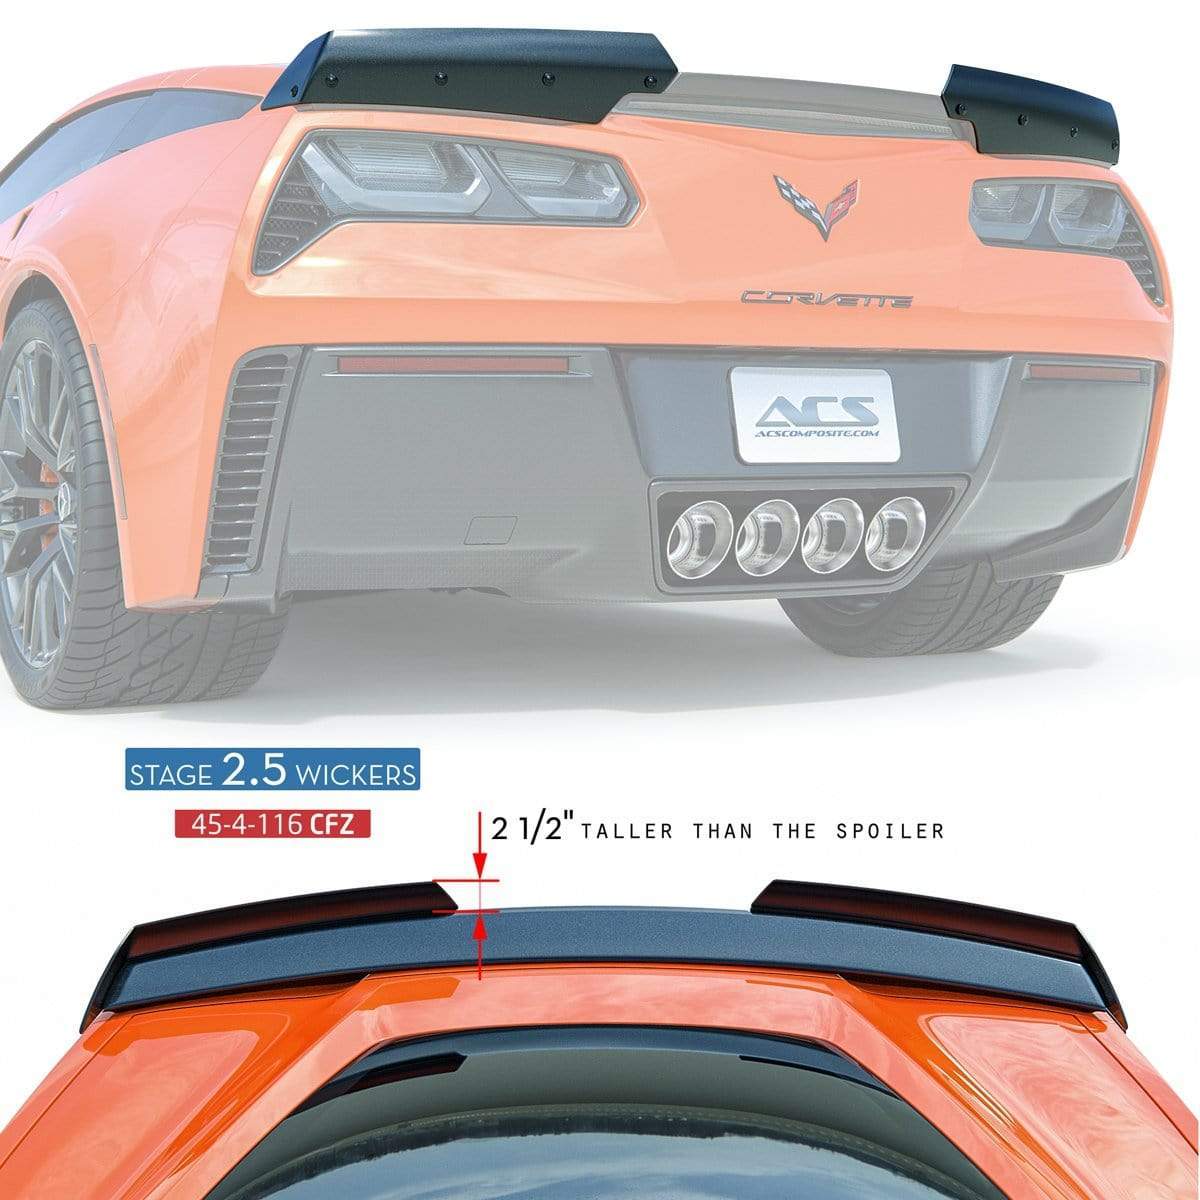 ACS Composite Stage 2.5 Wicker Spoiler Conversion Kit for C7 Corvette Z06 & Grand Sport - 45-4-116 CFZ Spoiler